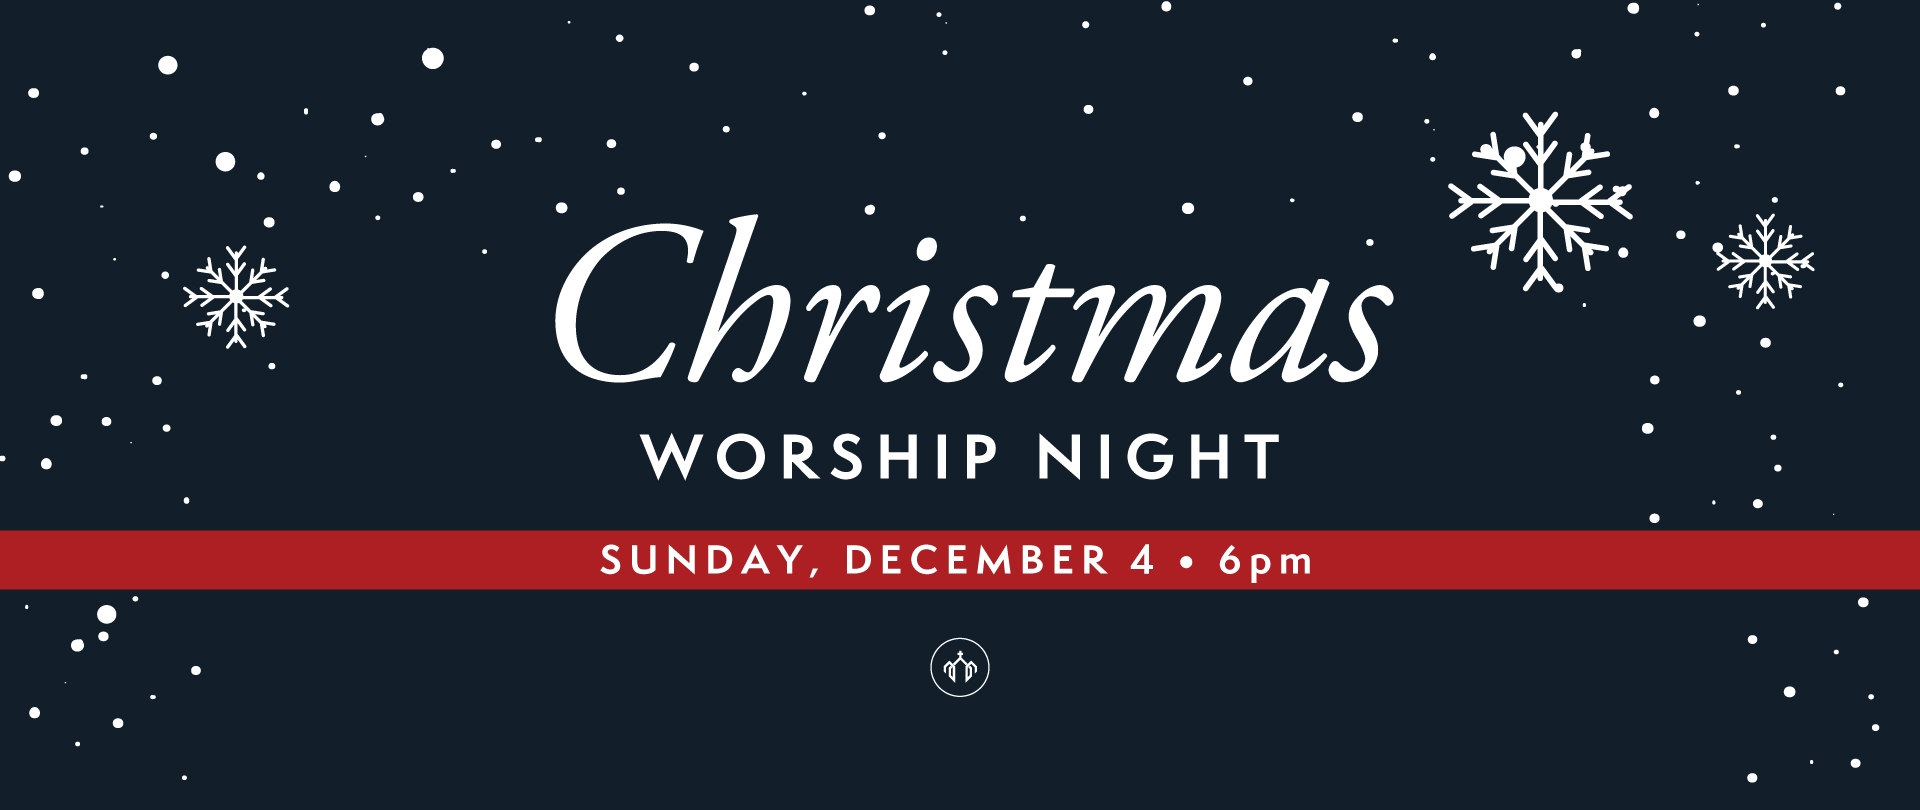 Christmas Worship Night - Sunday, December 4 at 6pm